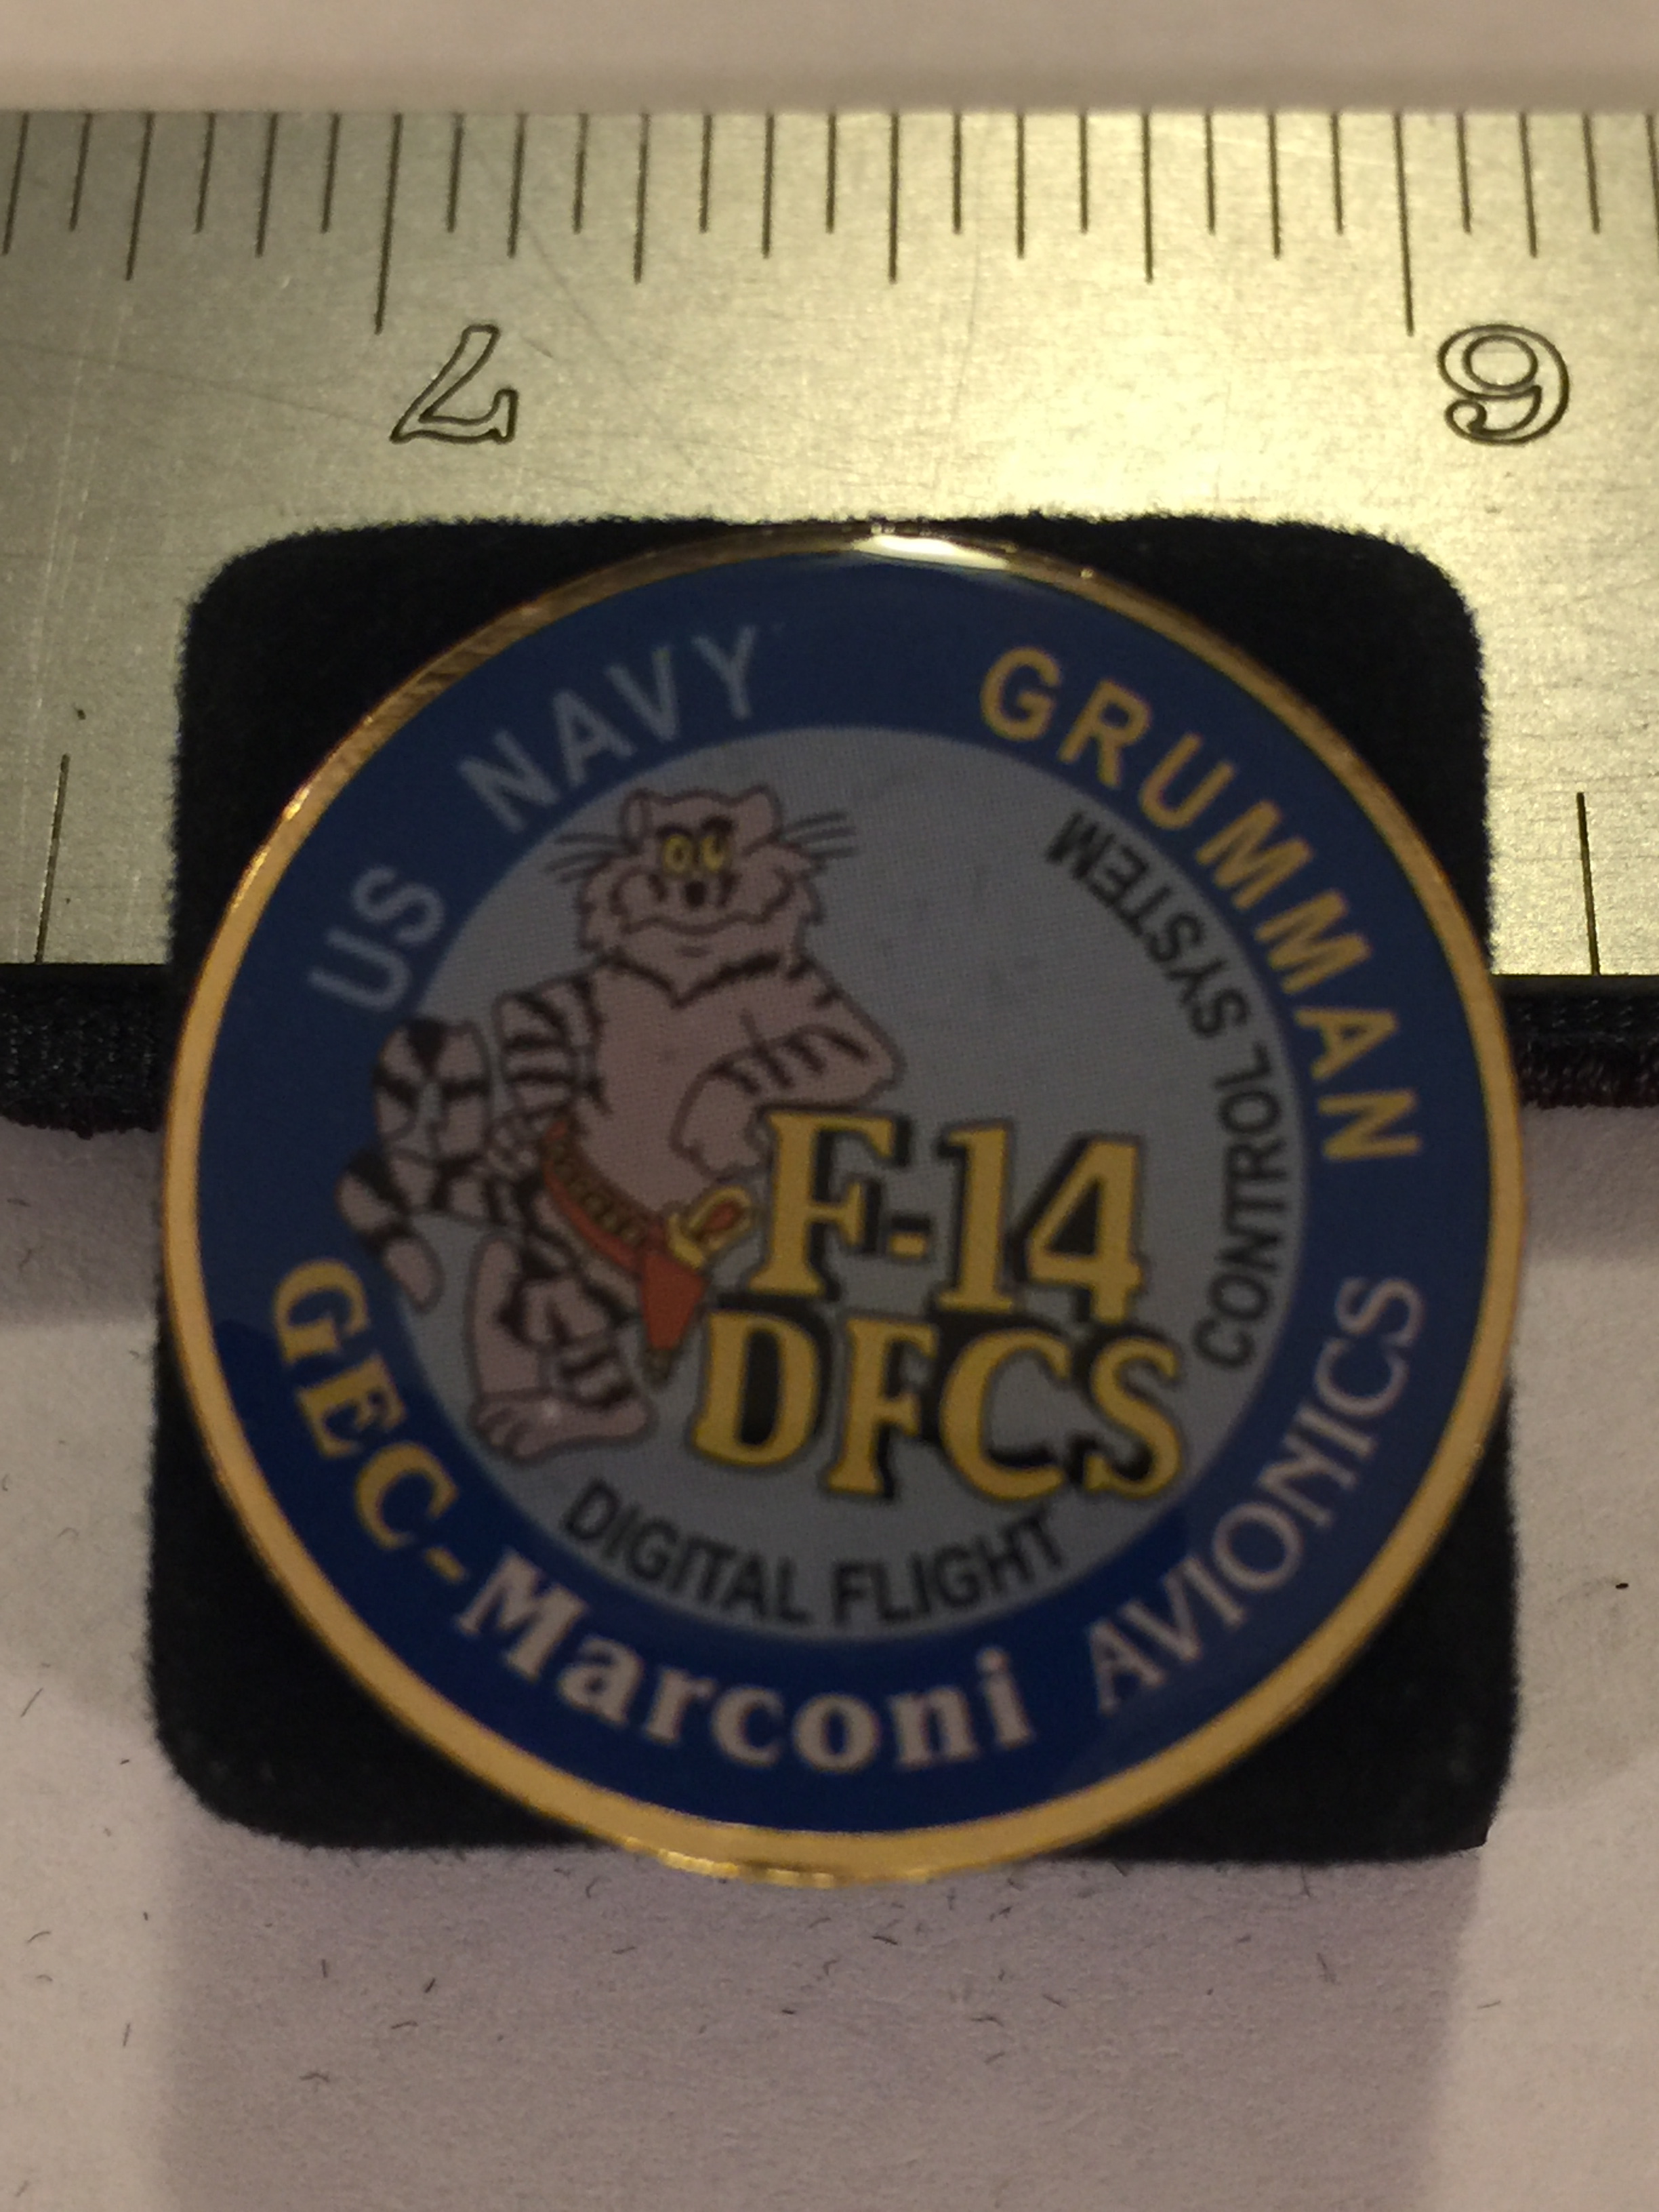 Lapel Pin: F-14 DFCS